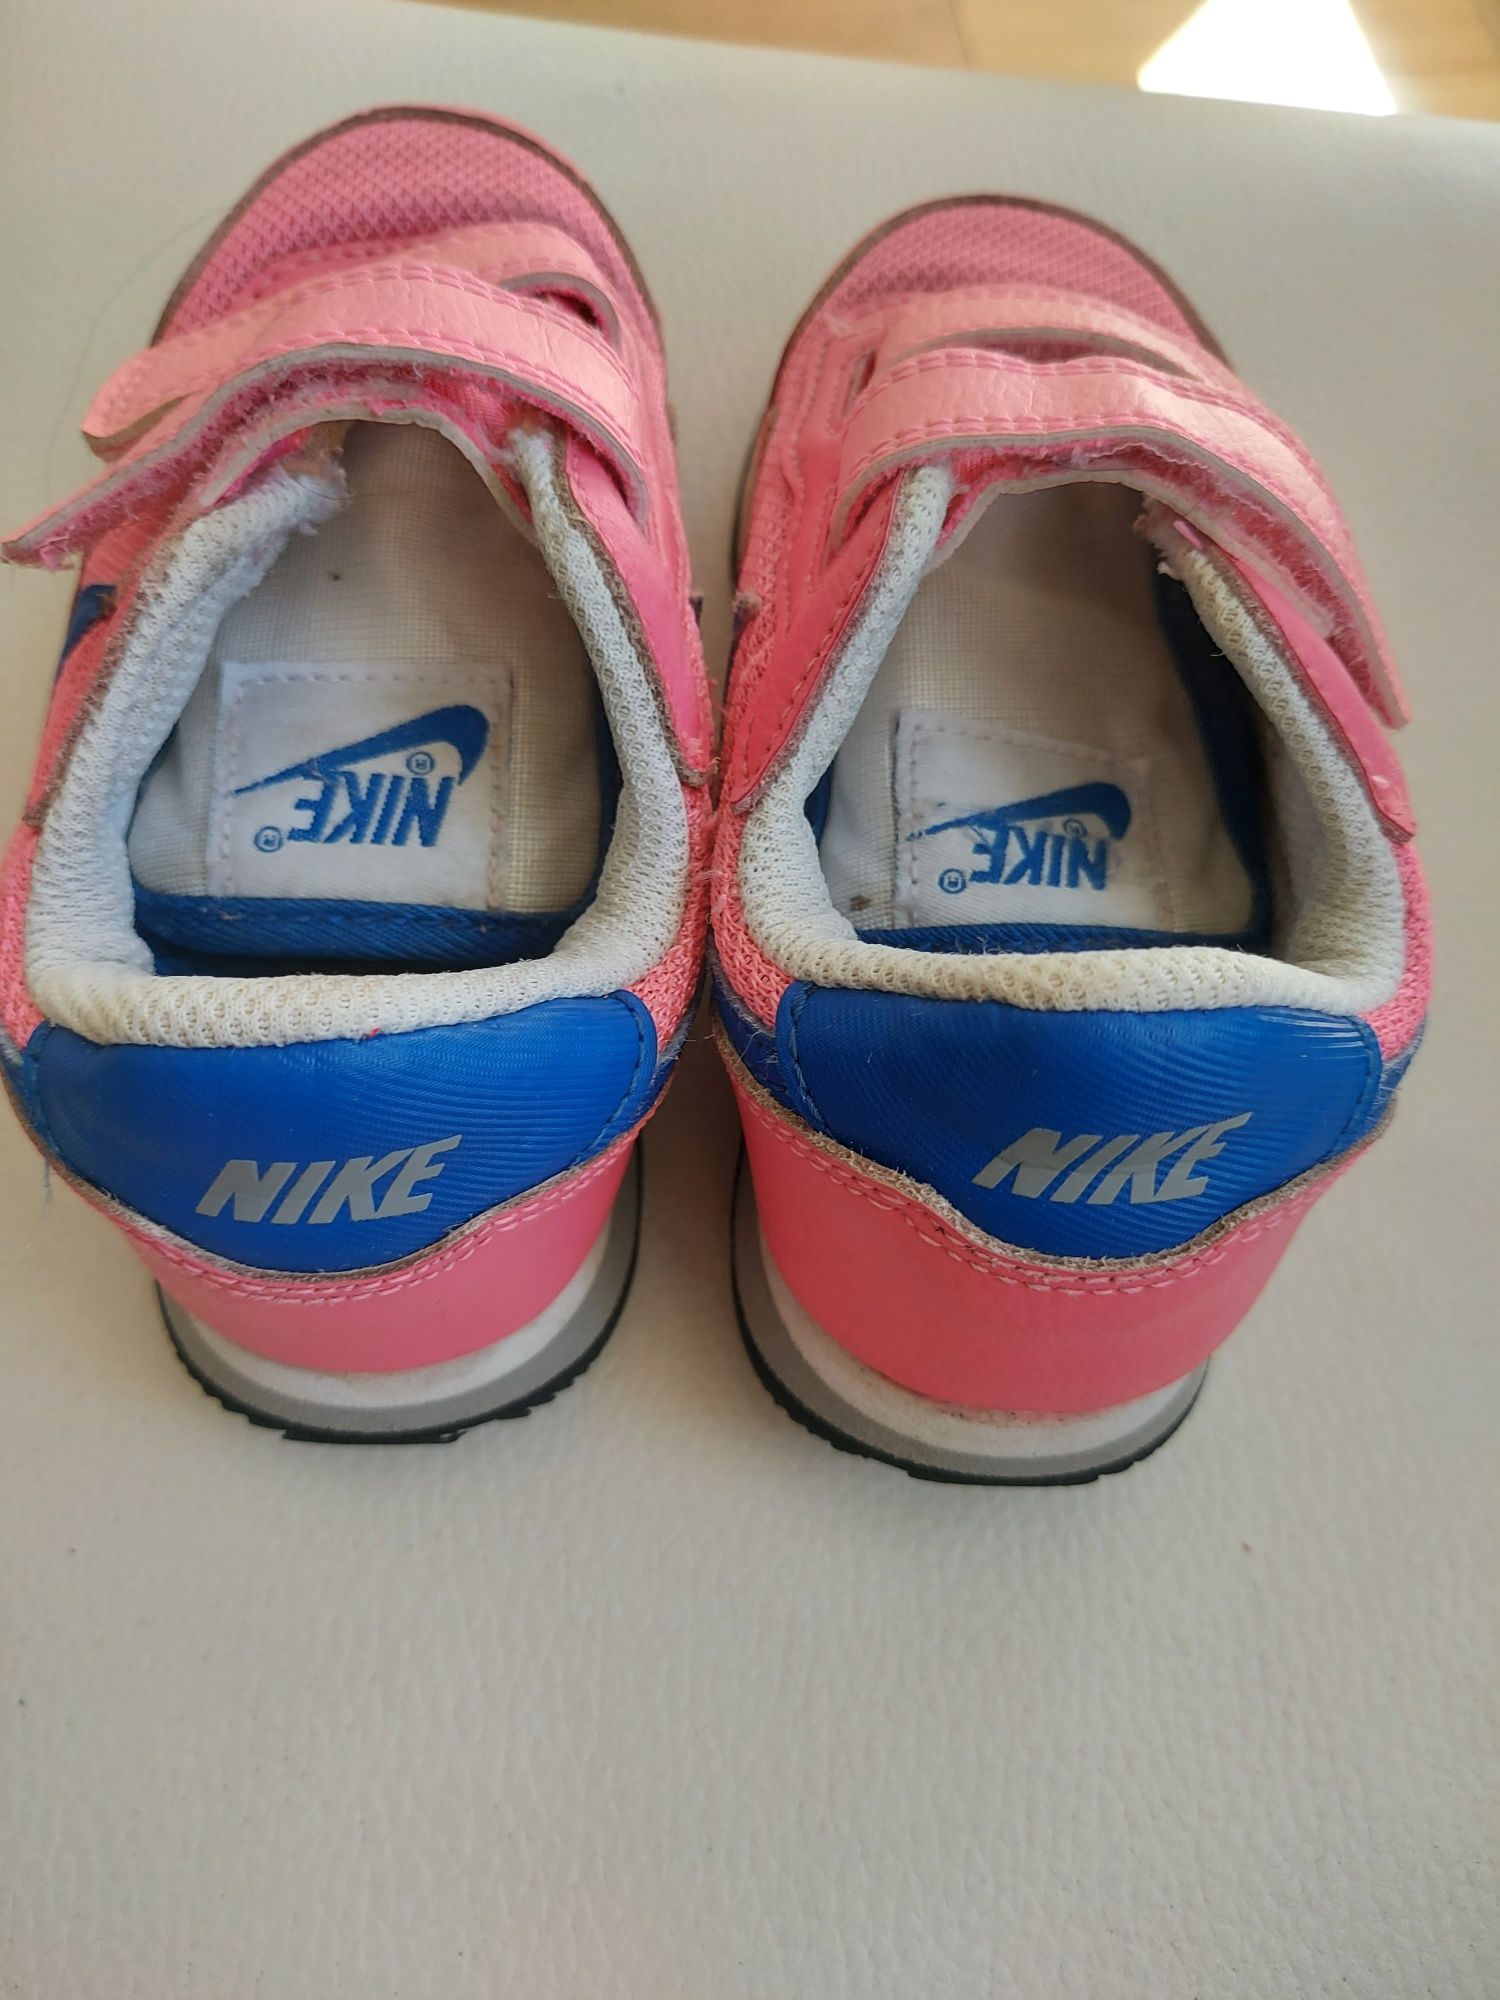 Adidasy Nike roz. 26